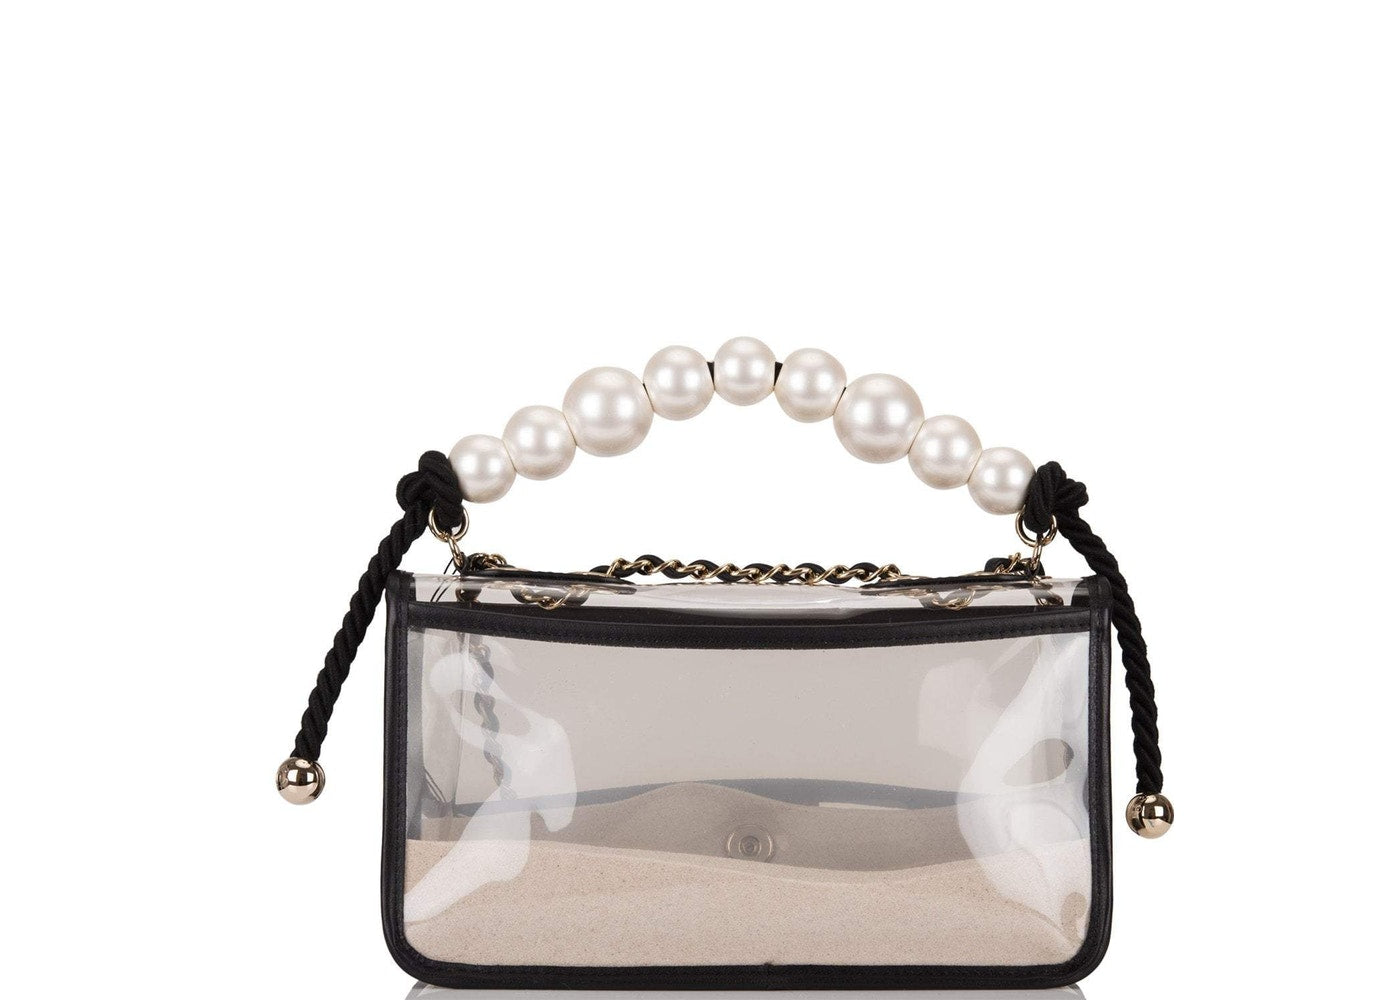 Chanel Sand Bag -3 For Sale on 1stDibs